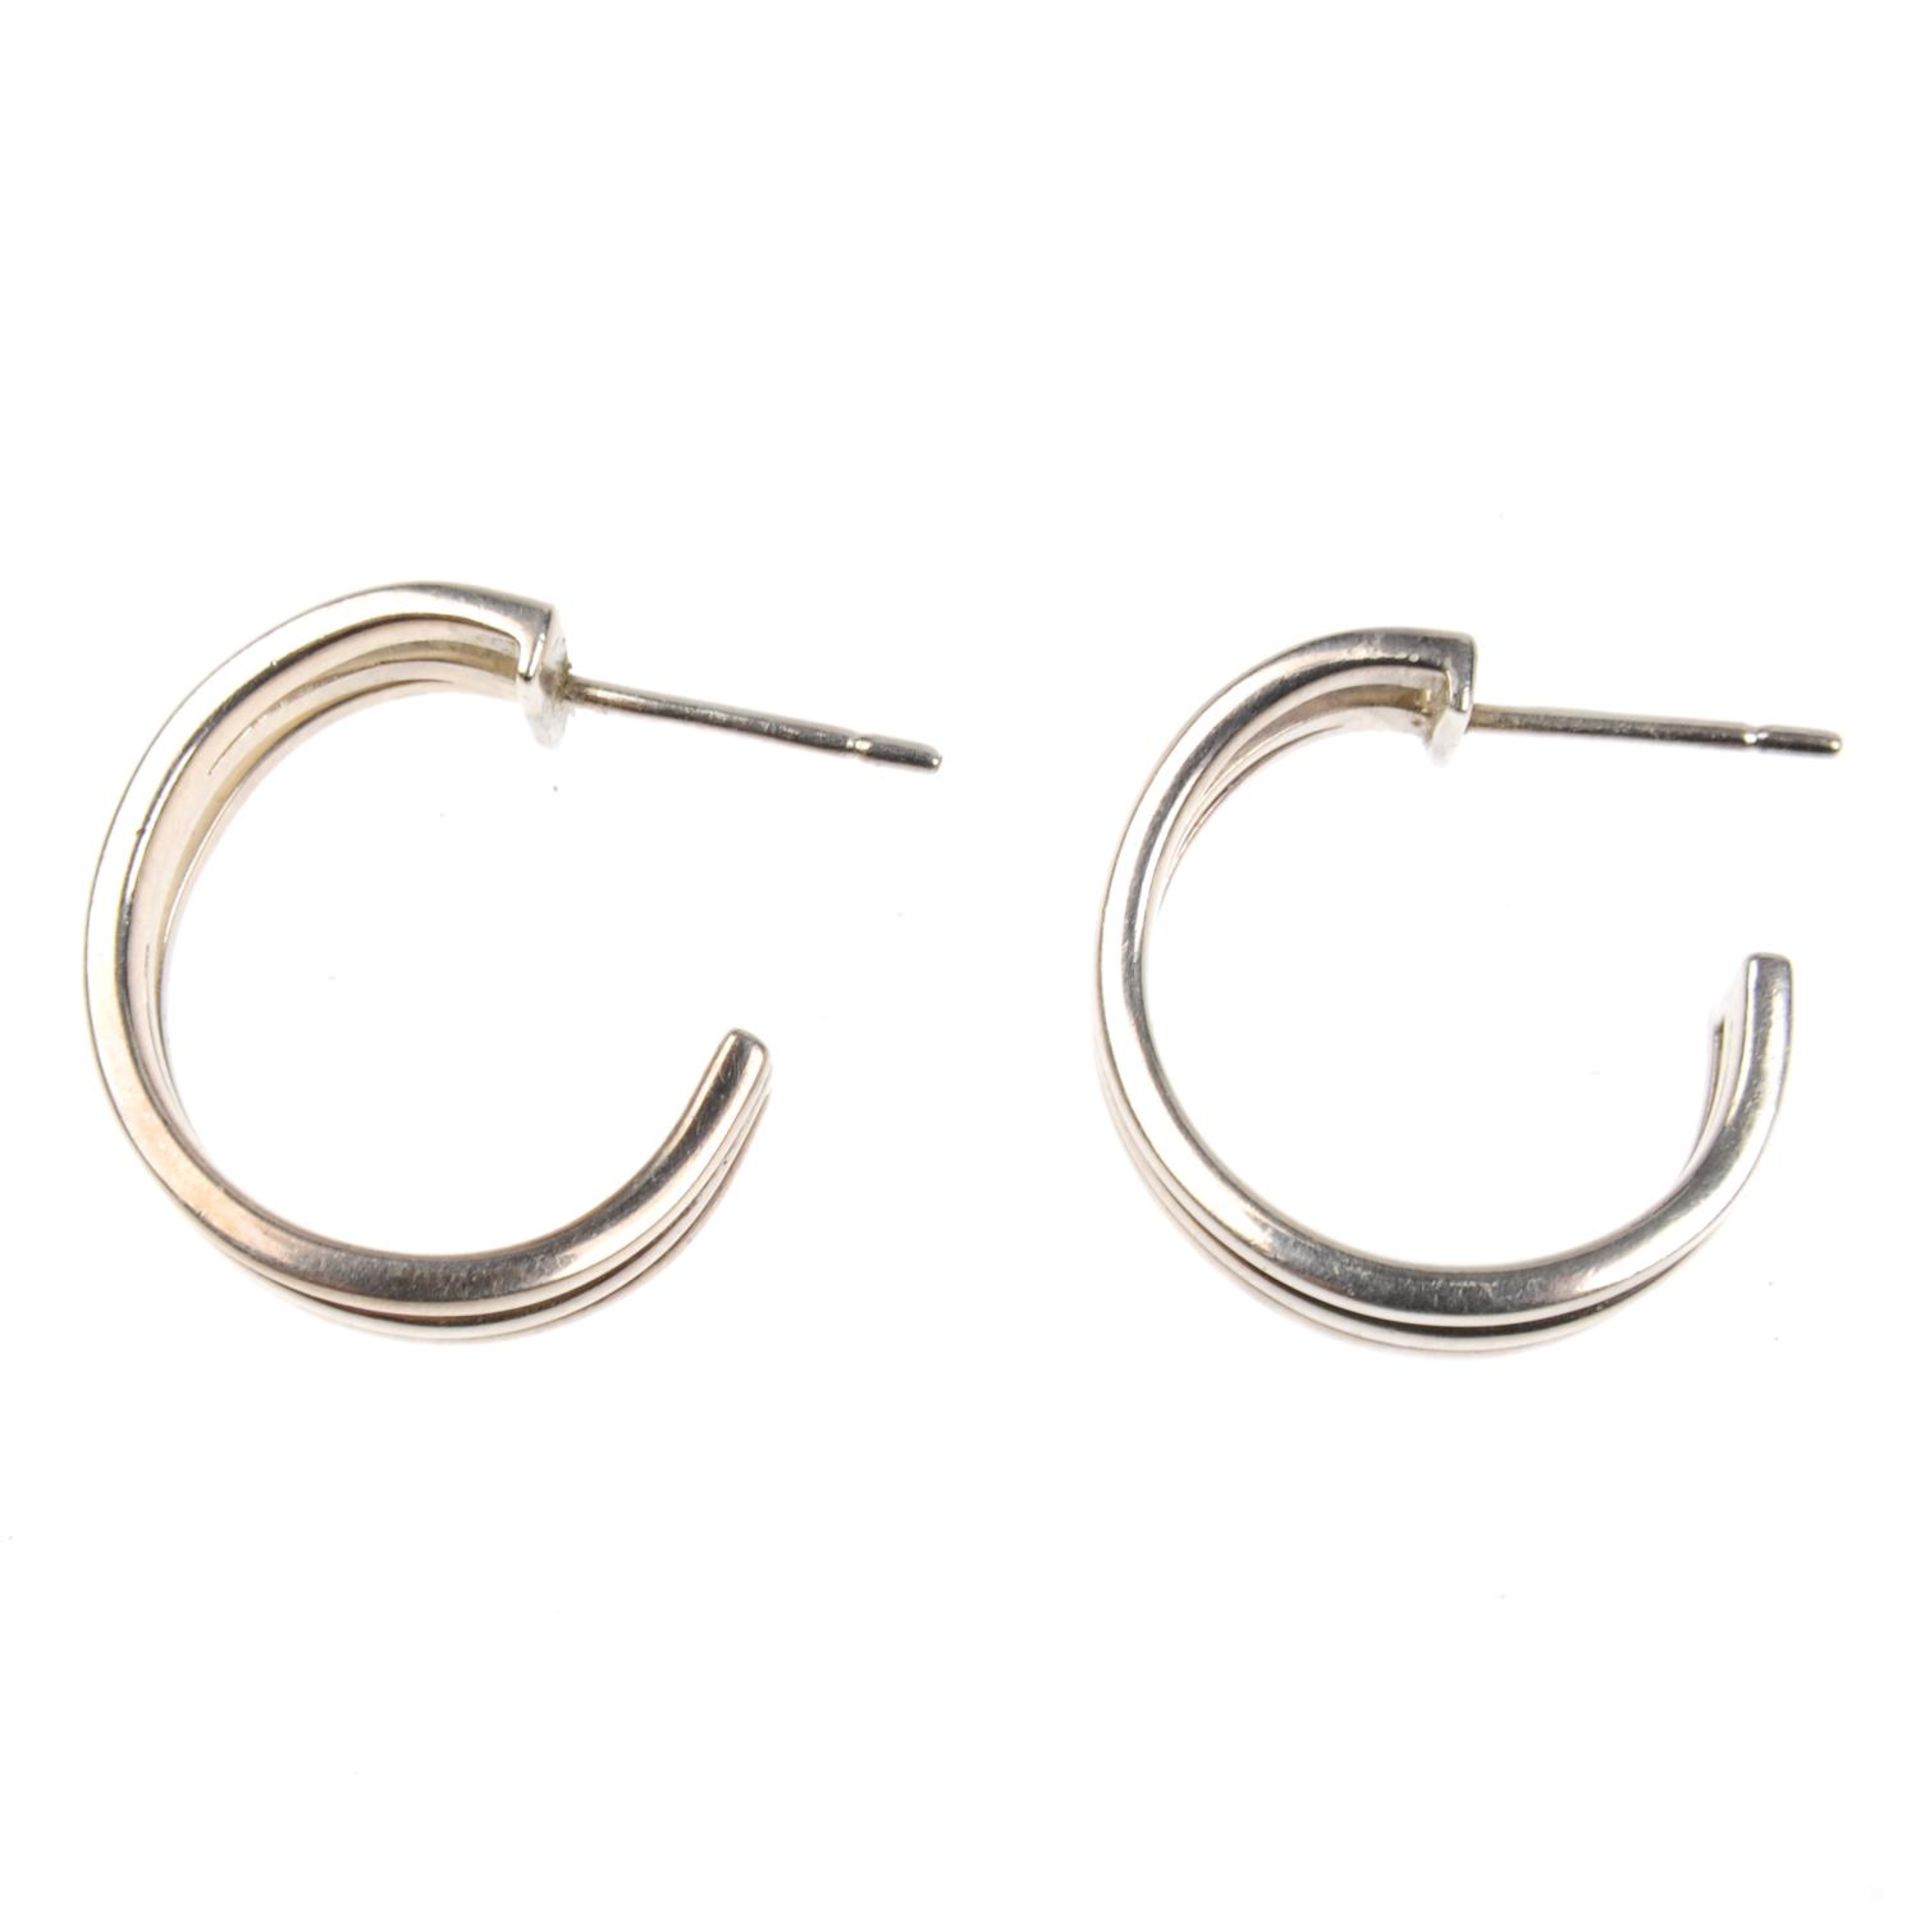 EMPORIO ARMANI - a pair of silver hoop earrings. - Bild 2 aus 2